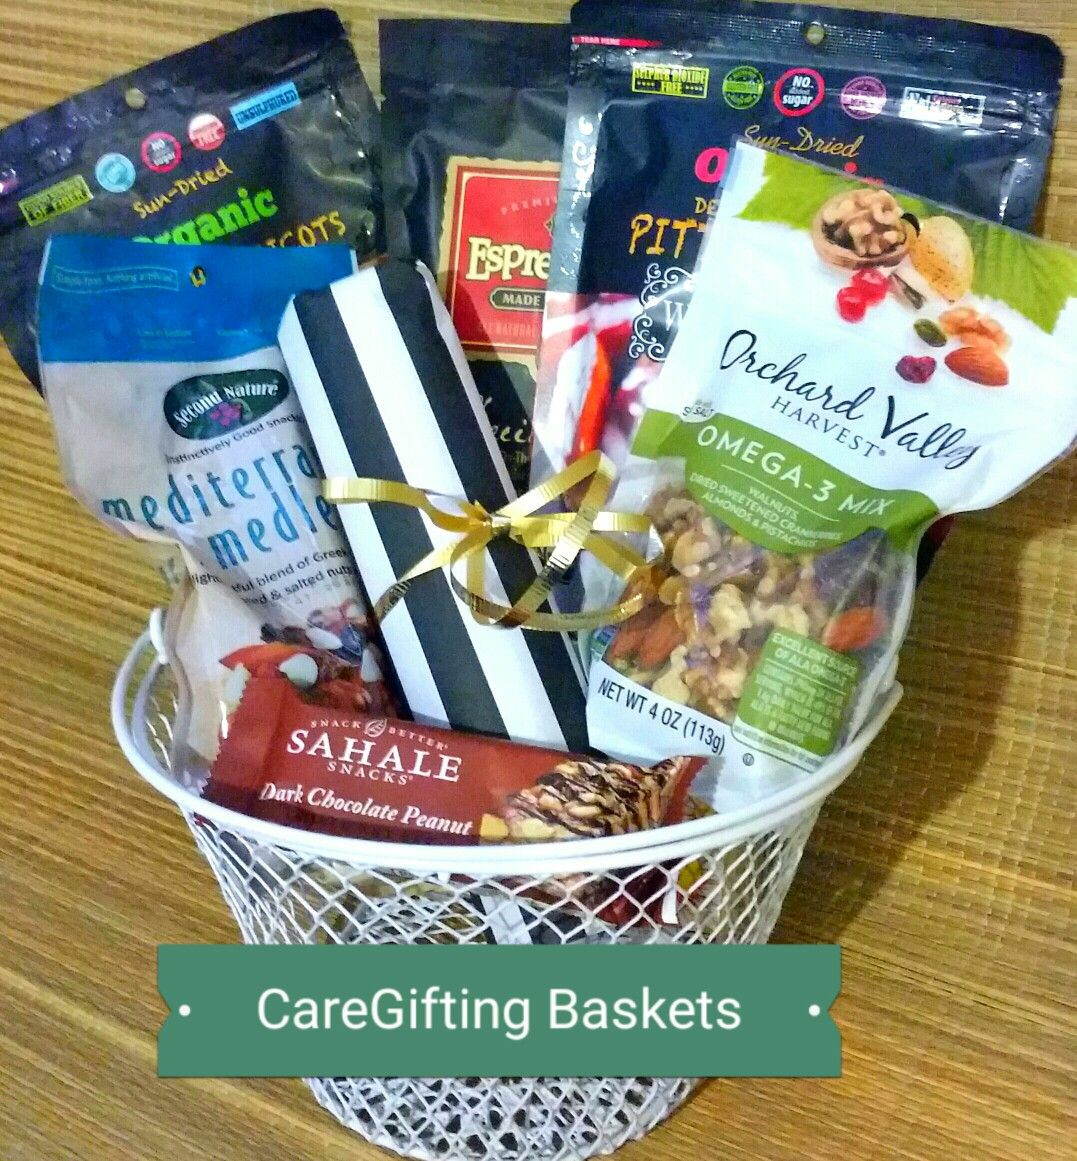 Get Well Gift Basket Ideas After Surgery
 Pin by CareGifting on After Surgery Gift Ideas